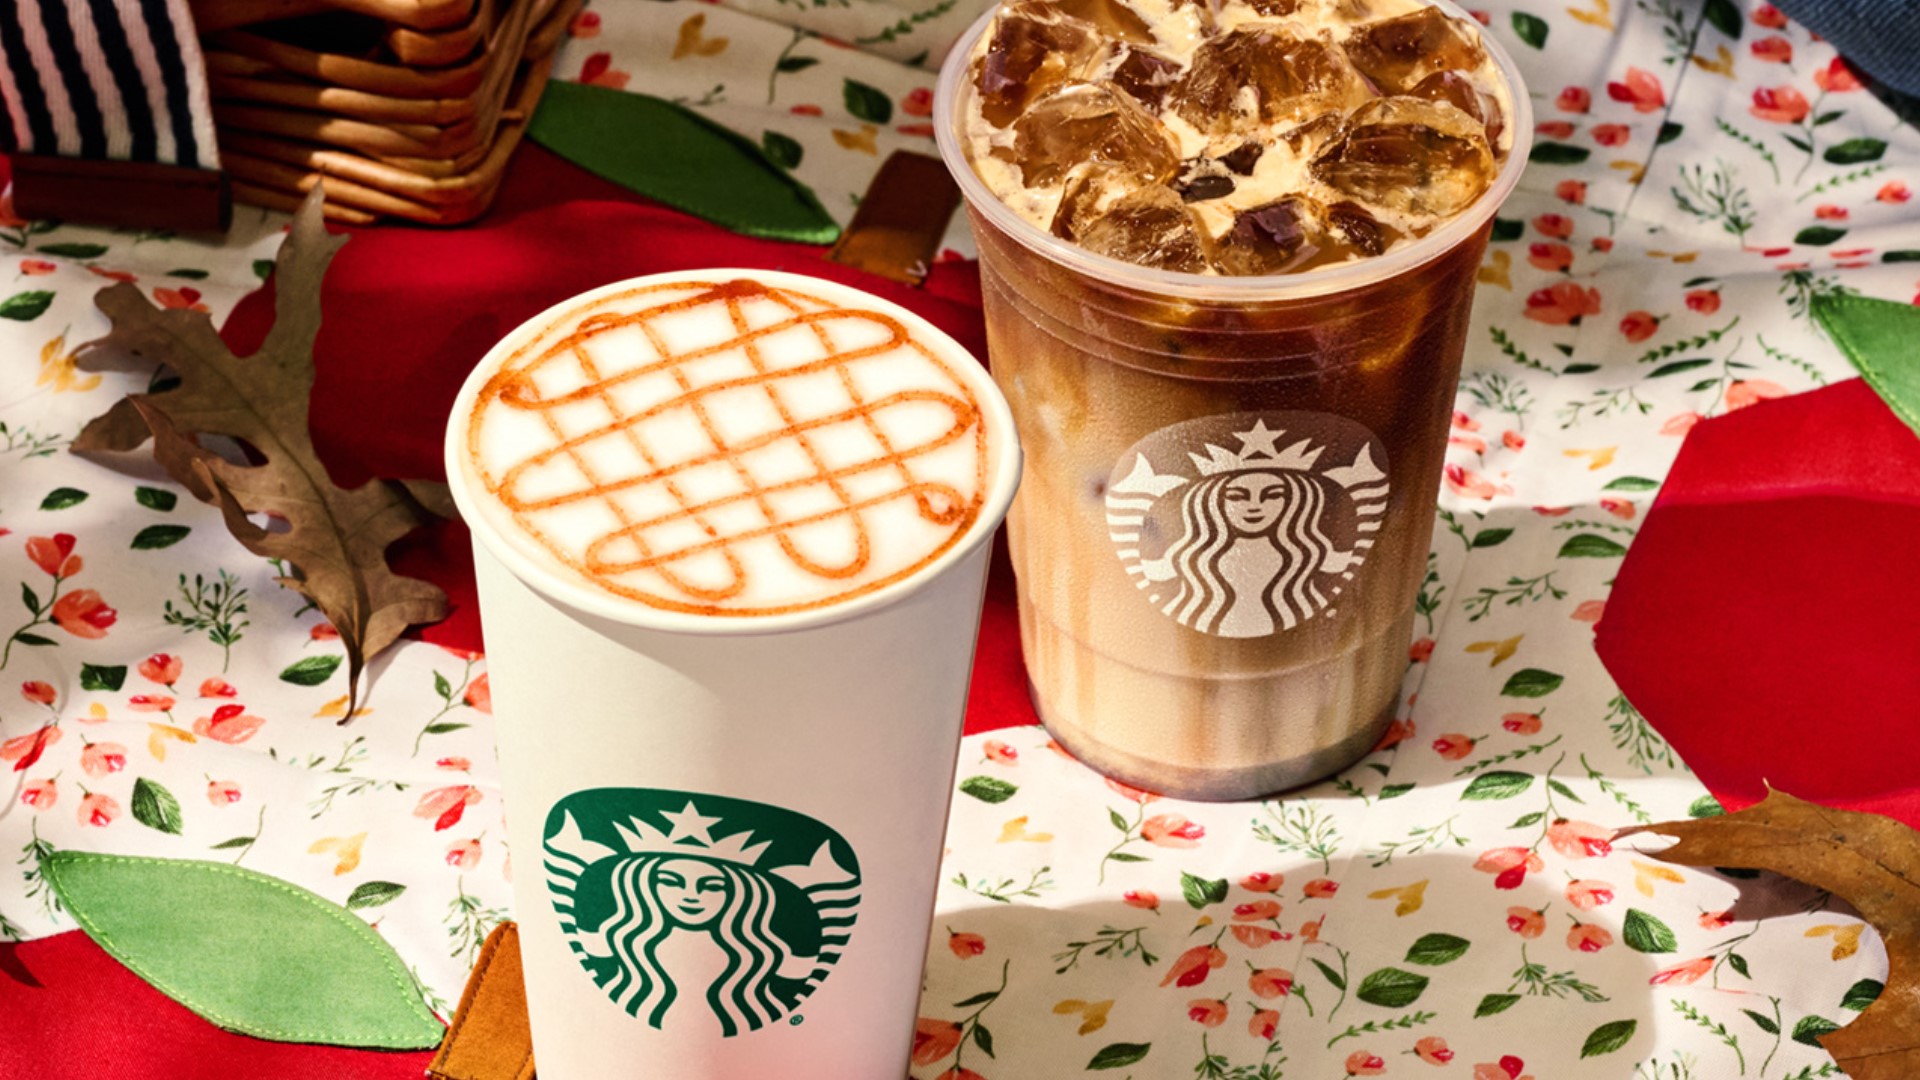 It's still August, but Starbucks is already focused on the fall season as pumpkin spice latte returns.